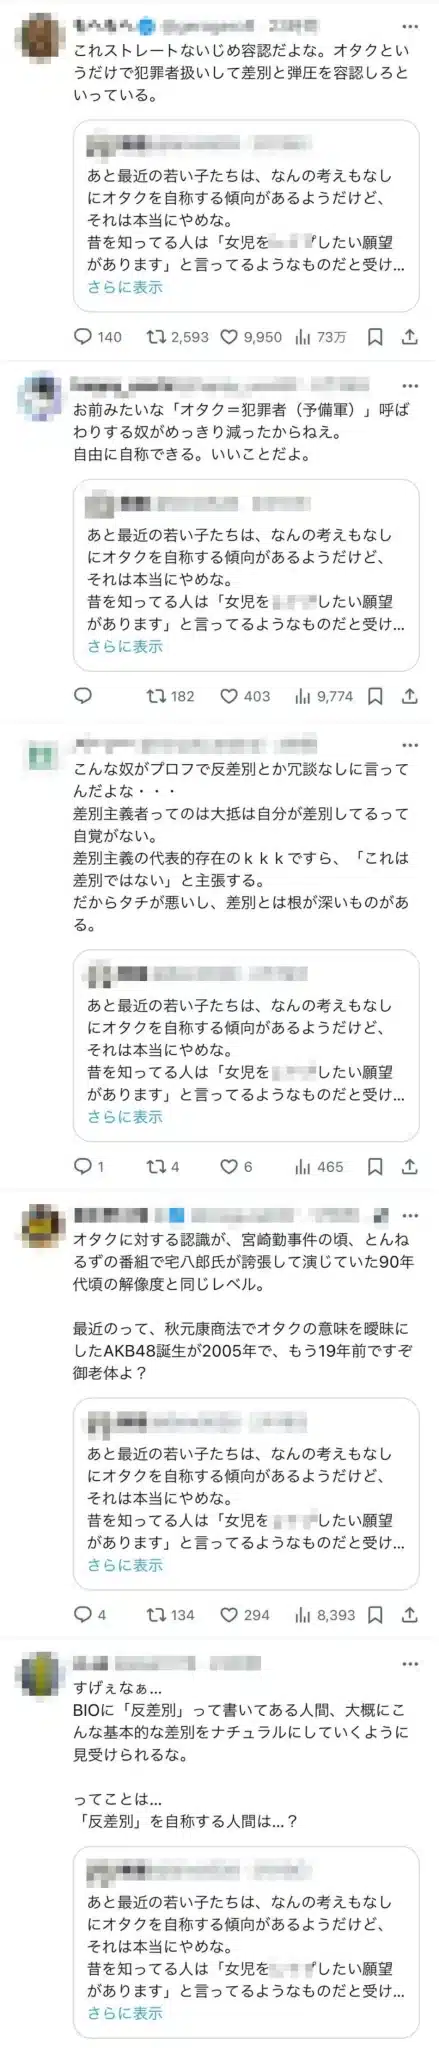 En Japon Feminista Afirma Que Los Fans Del Anime Son Criminales 1 Scaled